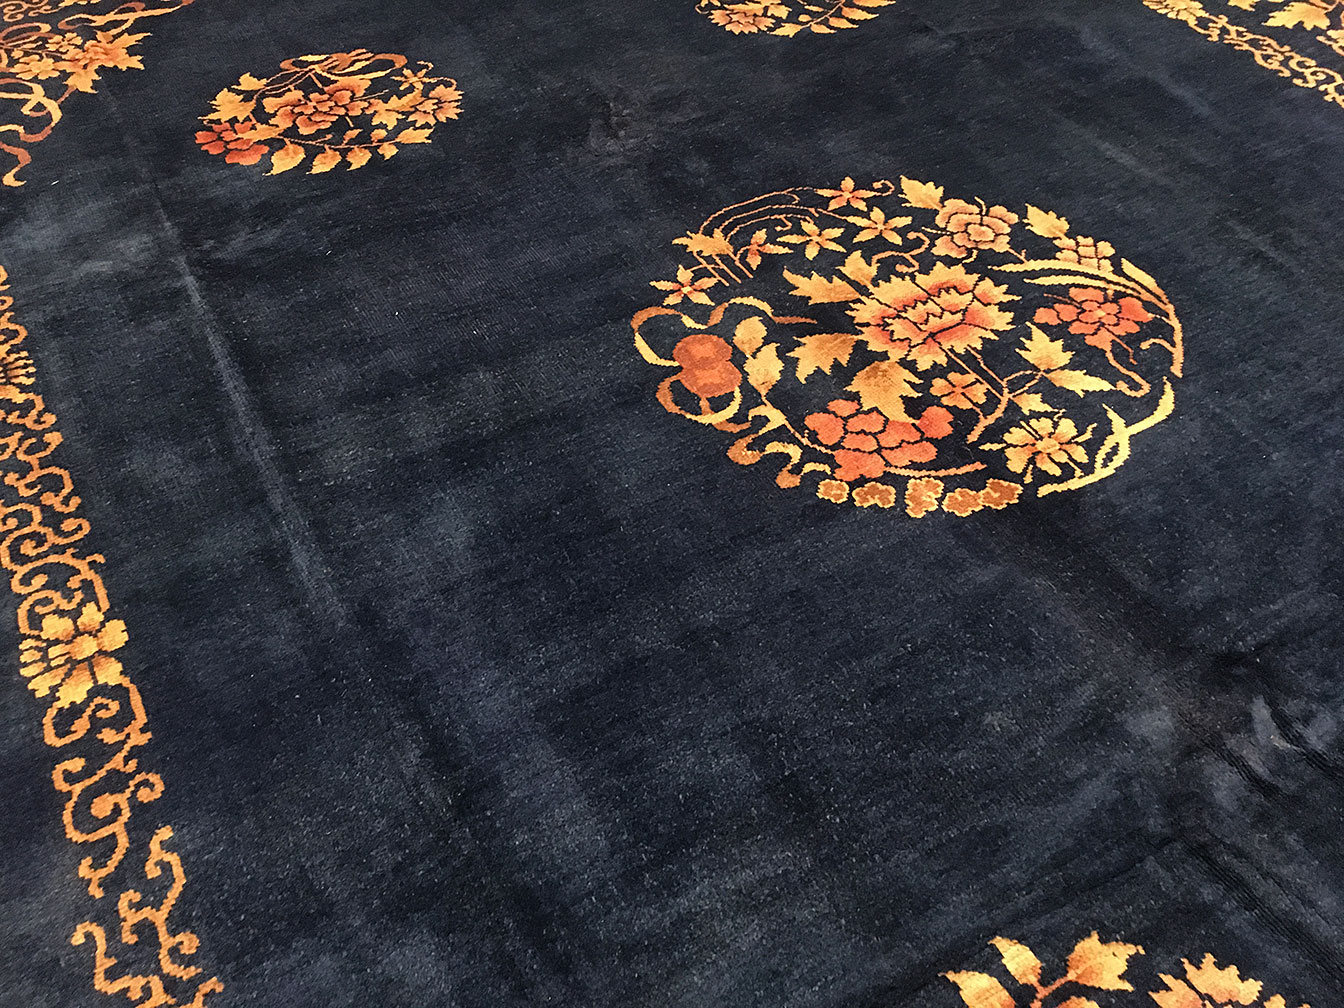 Antique chinese Carpet - # 50778